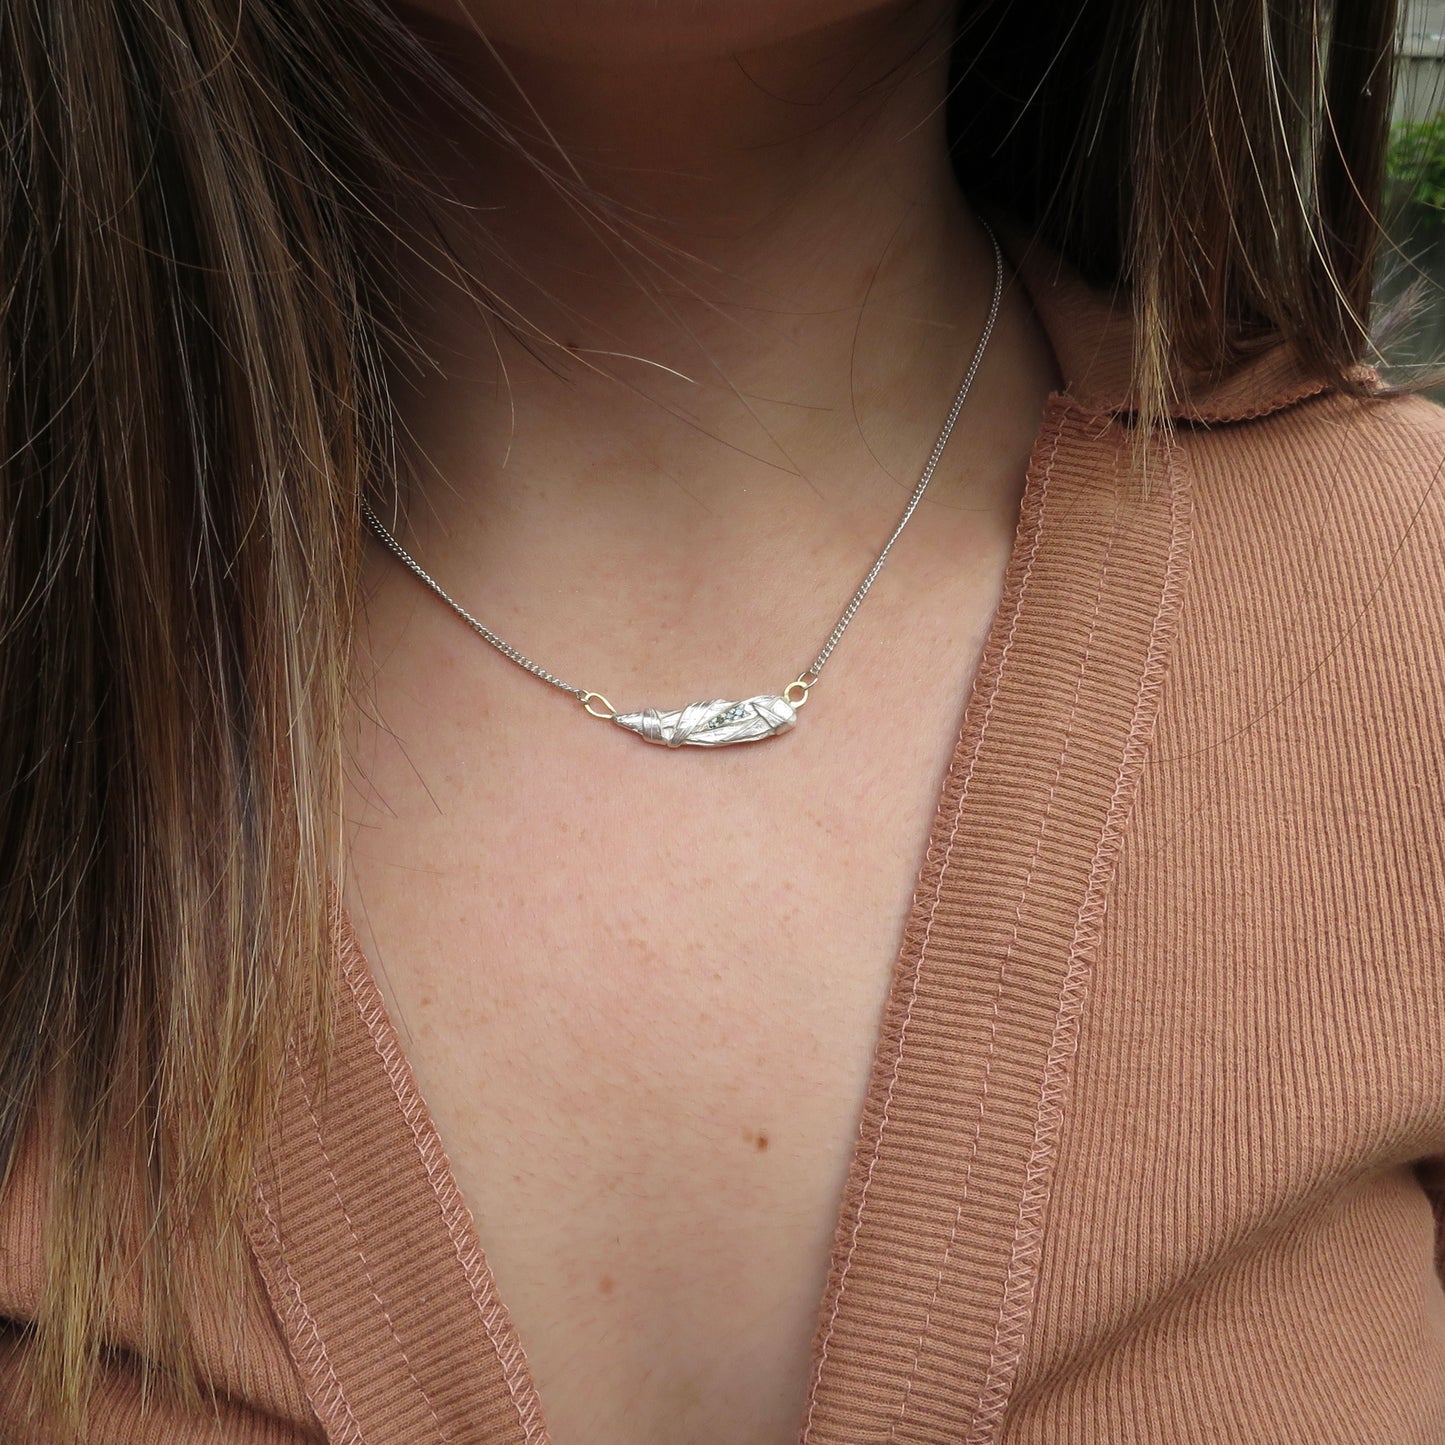 Woven pendant with aqua diamonds